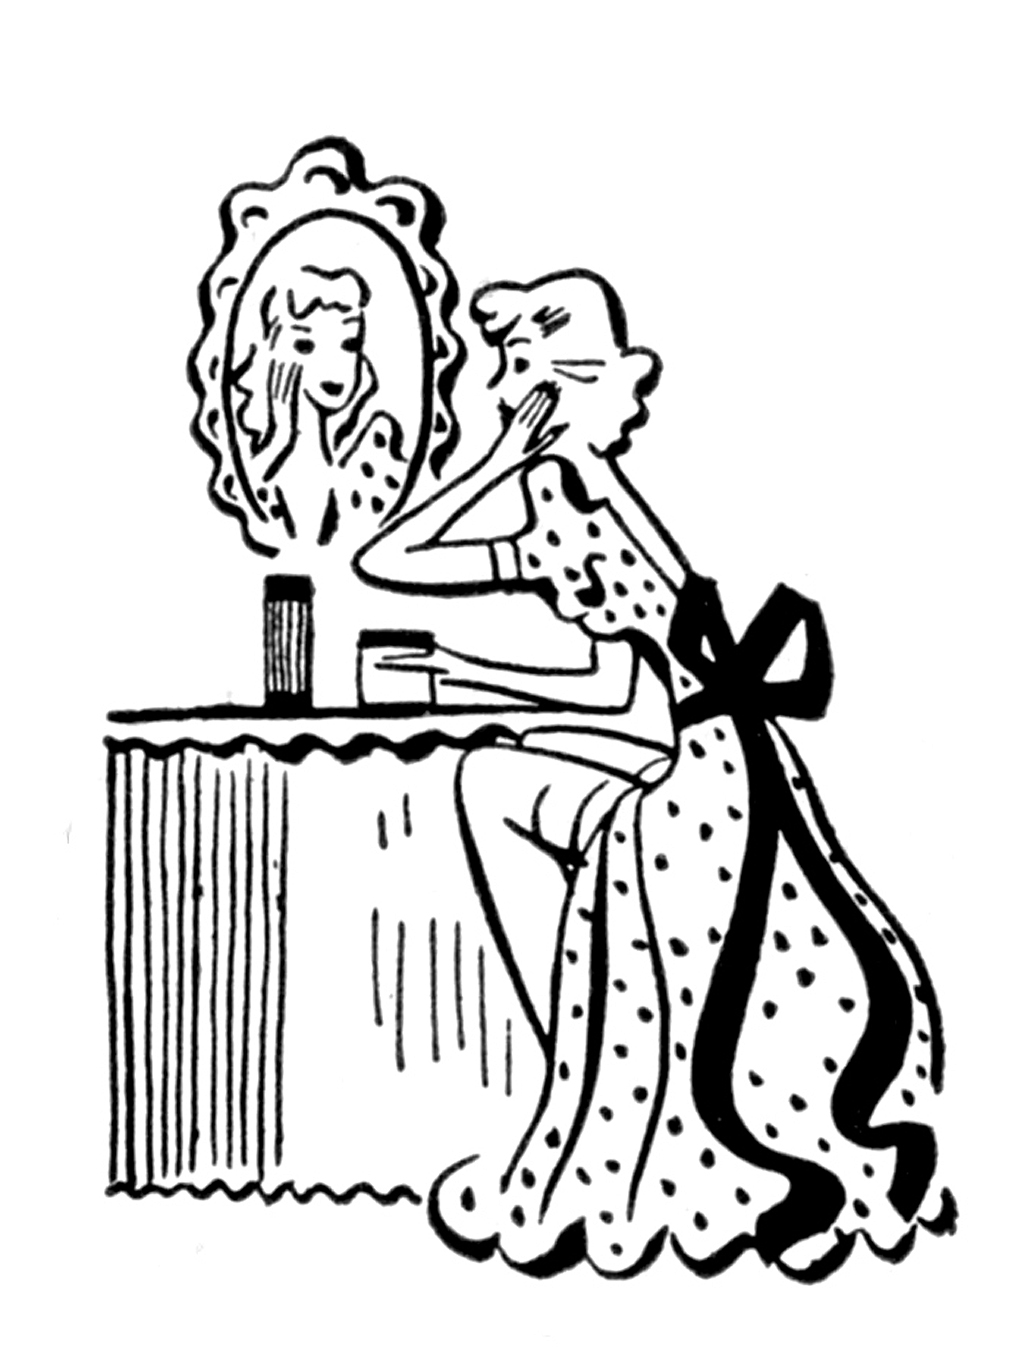 Image result for public domain vintage graphics fairy rich